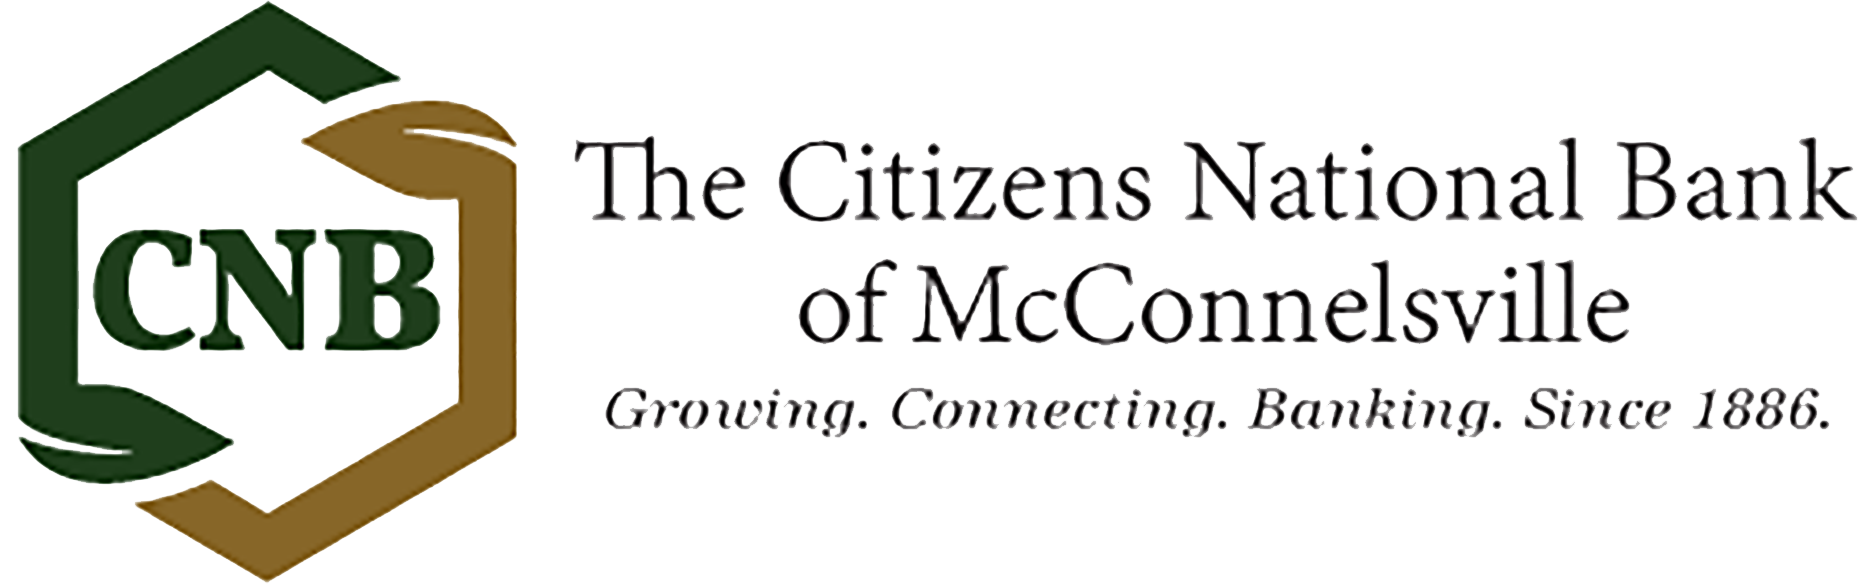 Citizens National Bank of McConnelsville Mobile Logo